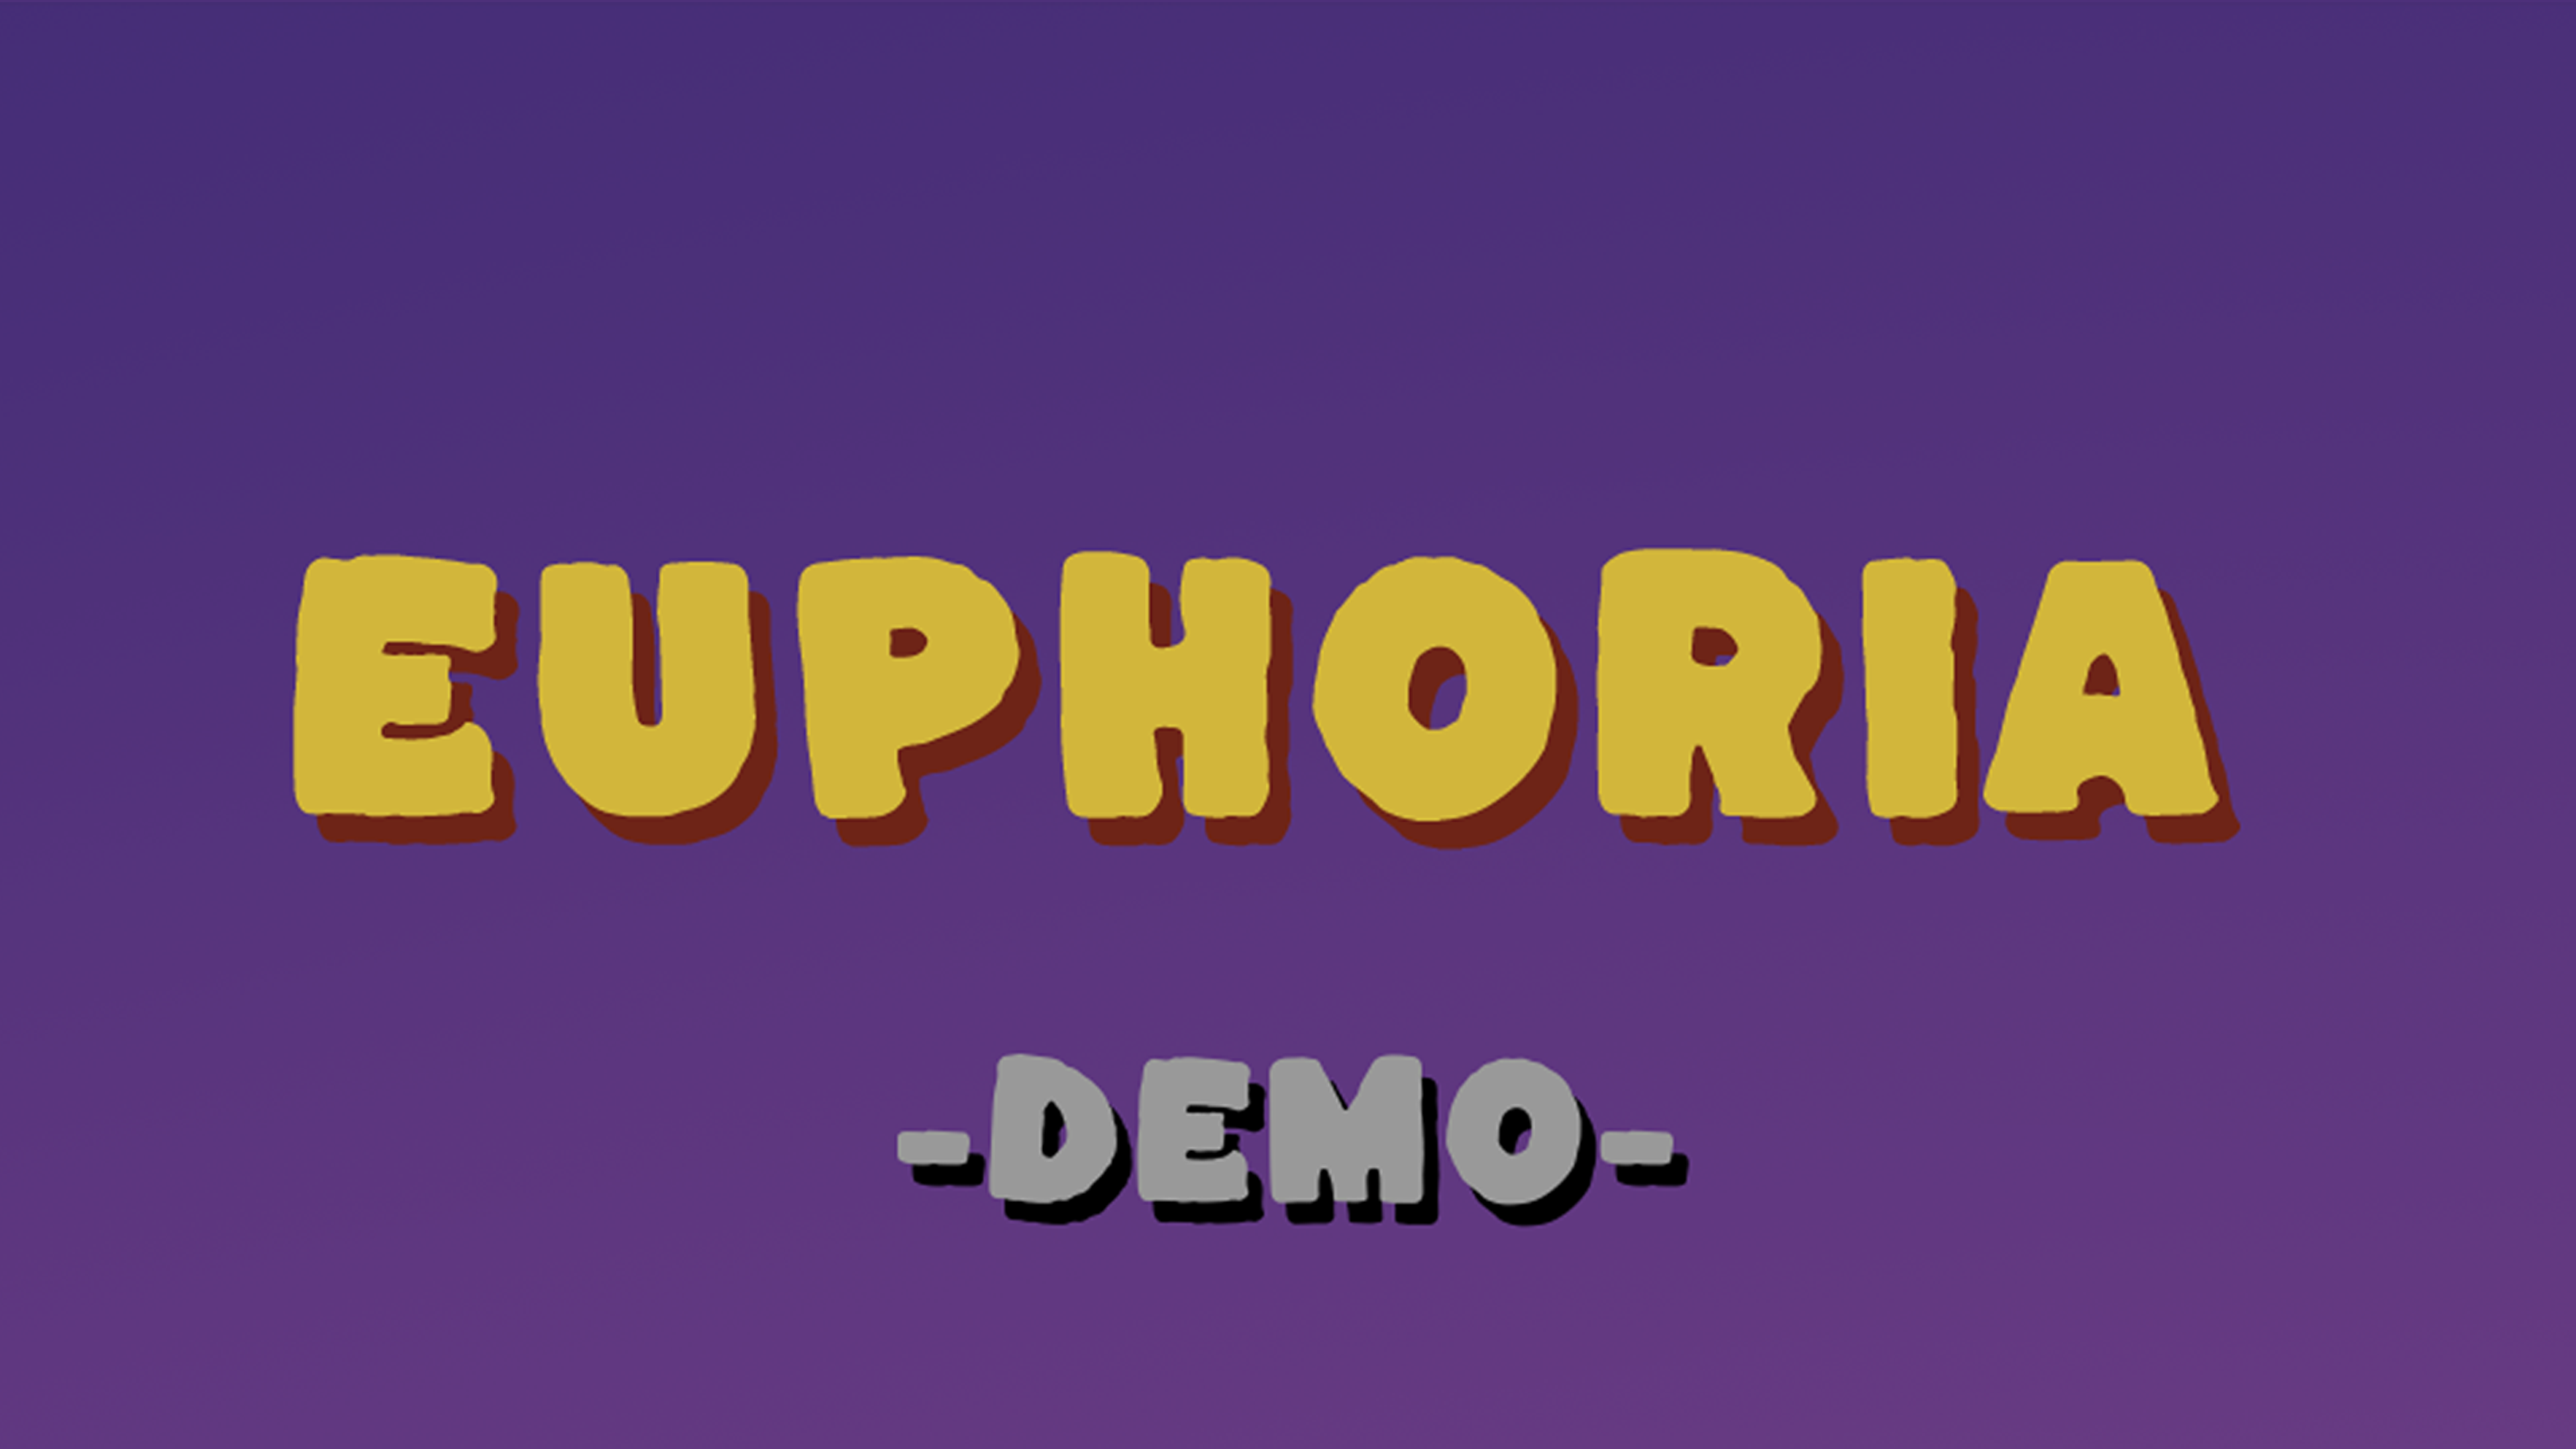 Euphoria (working title)